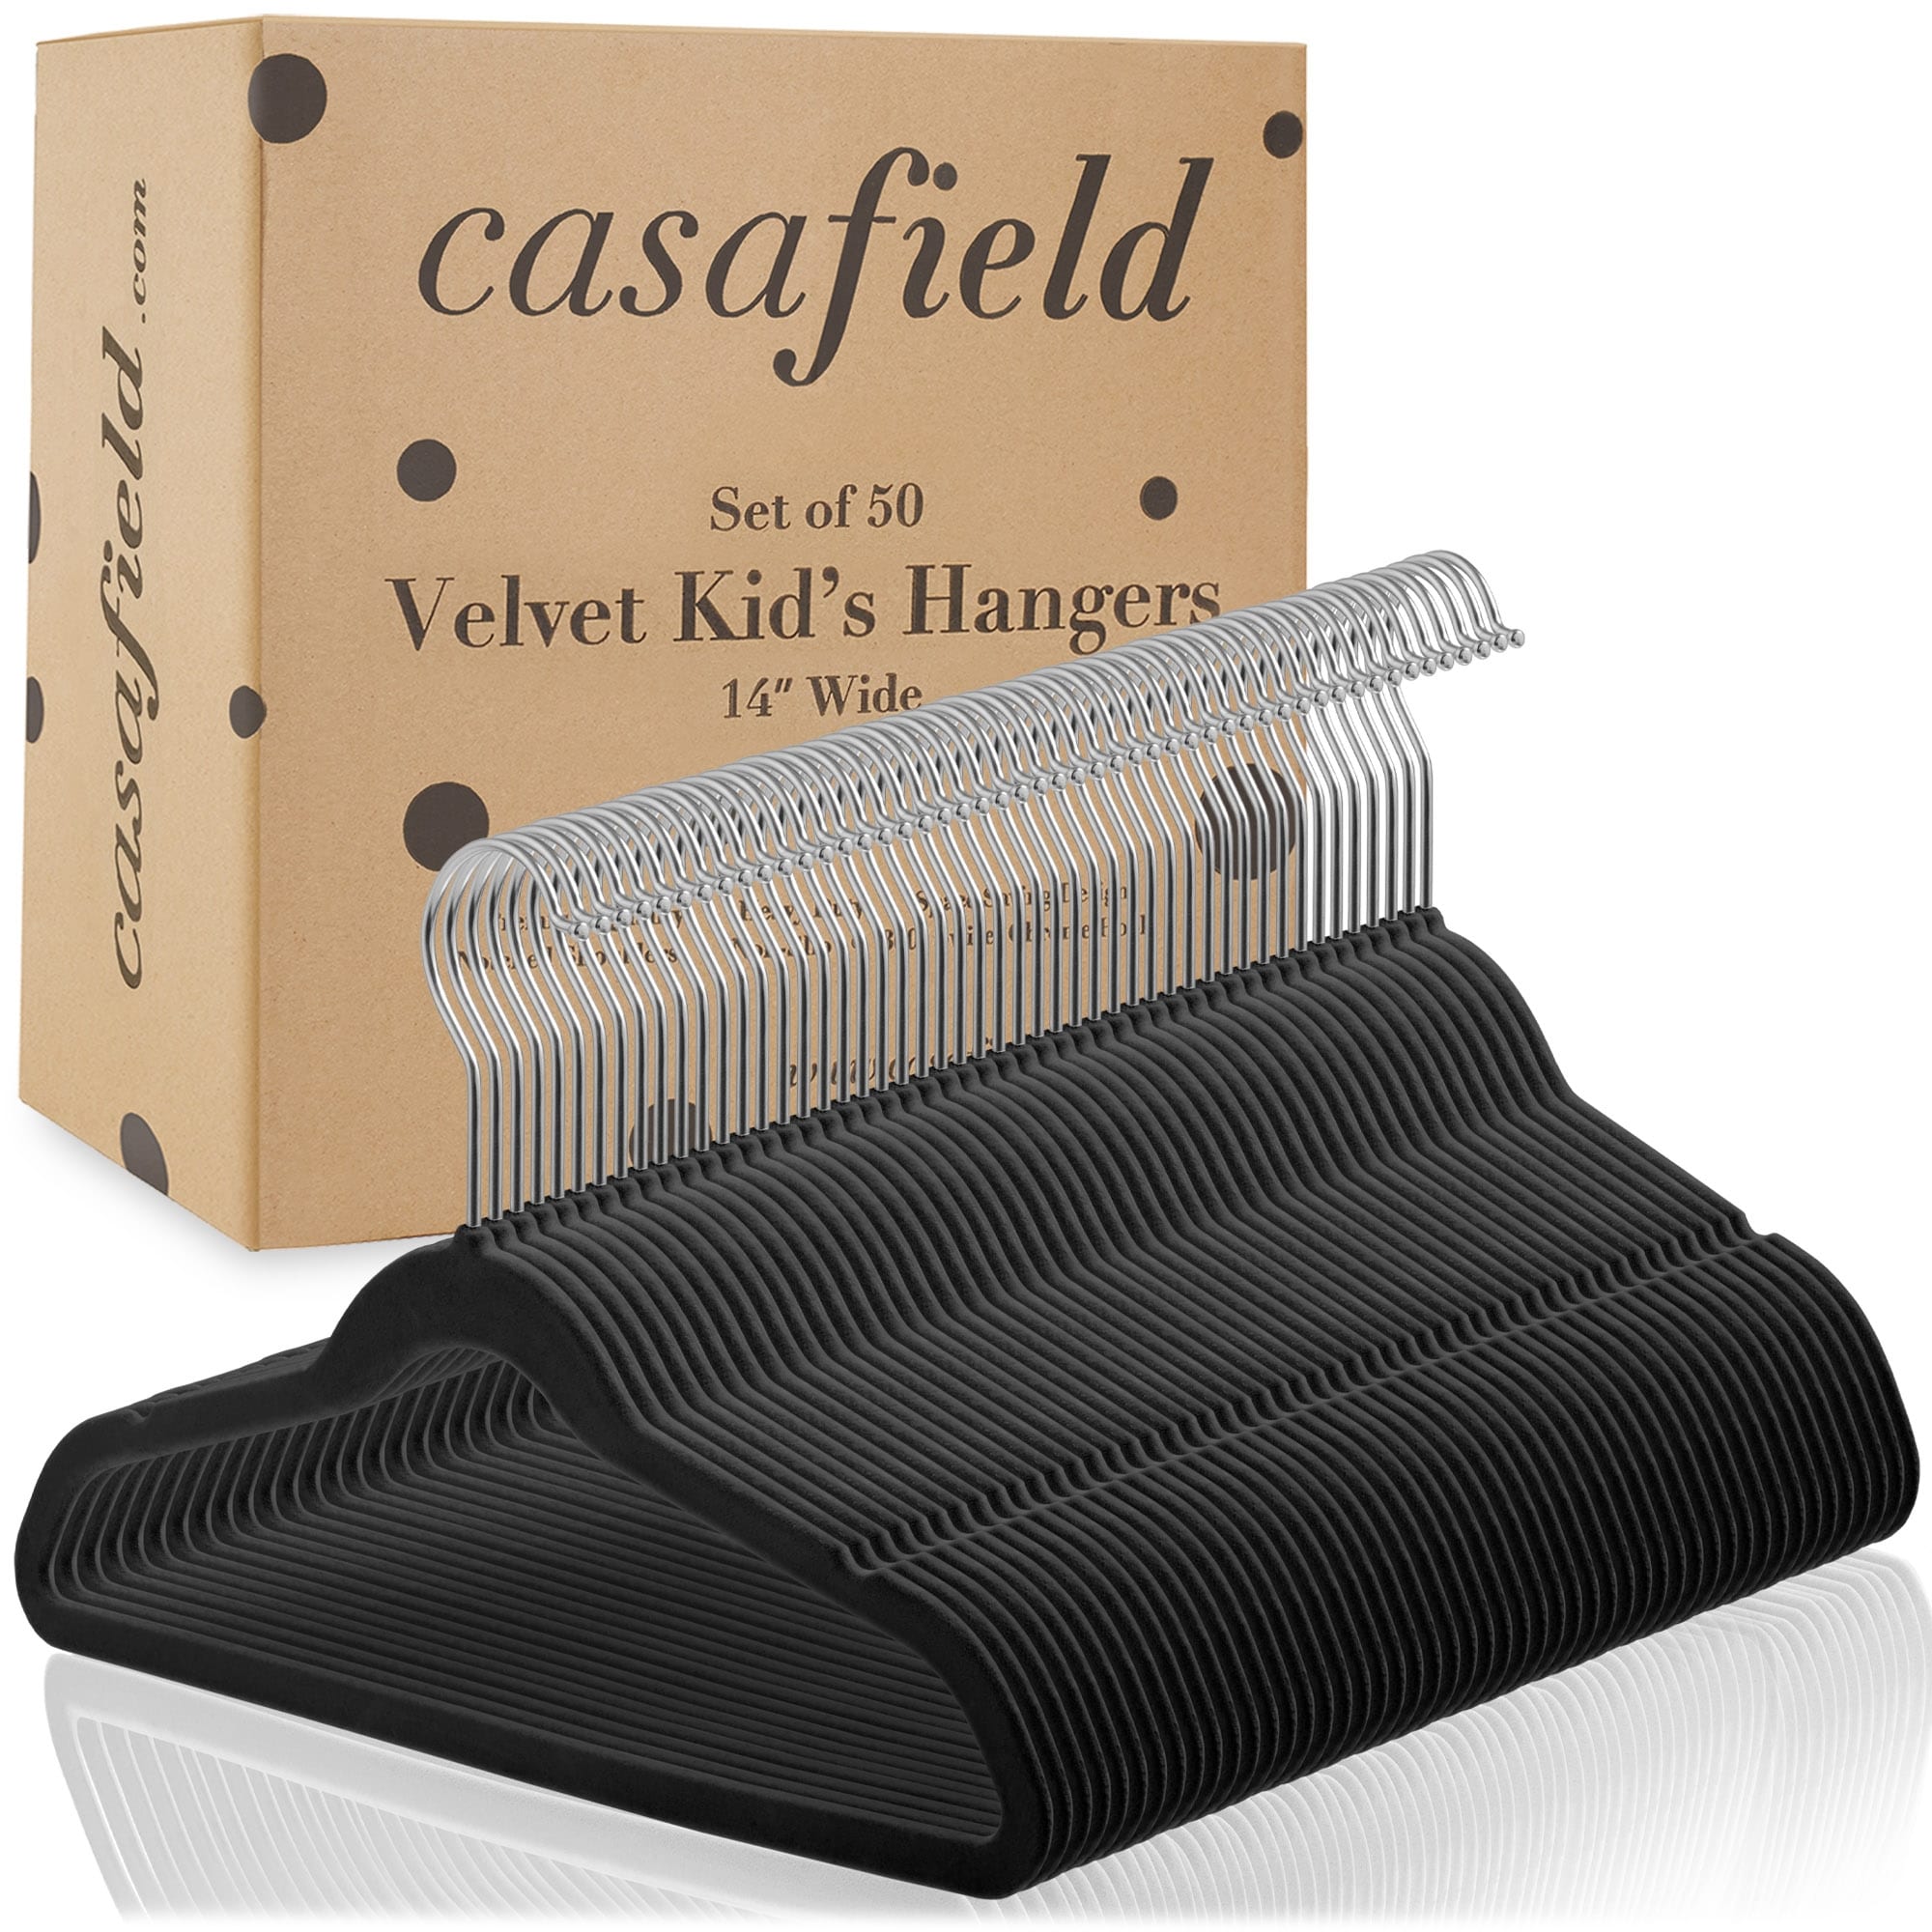 50 Velvet 14 Kid's Hangers by Casafield - Bed Bath & Beyond - 30827875